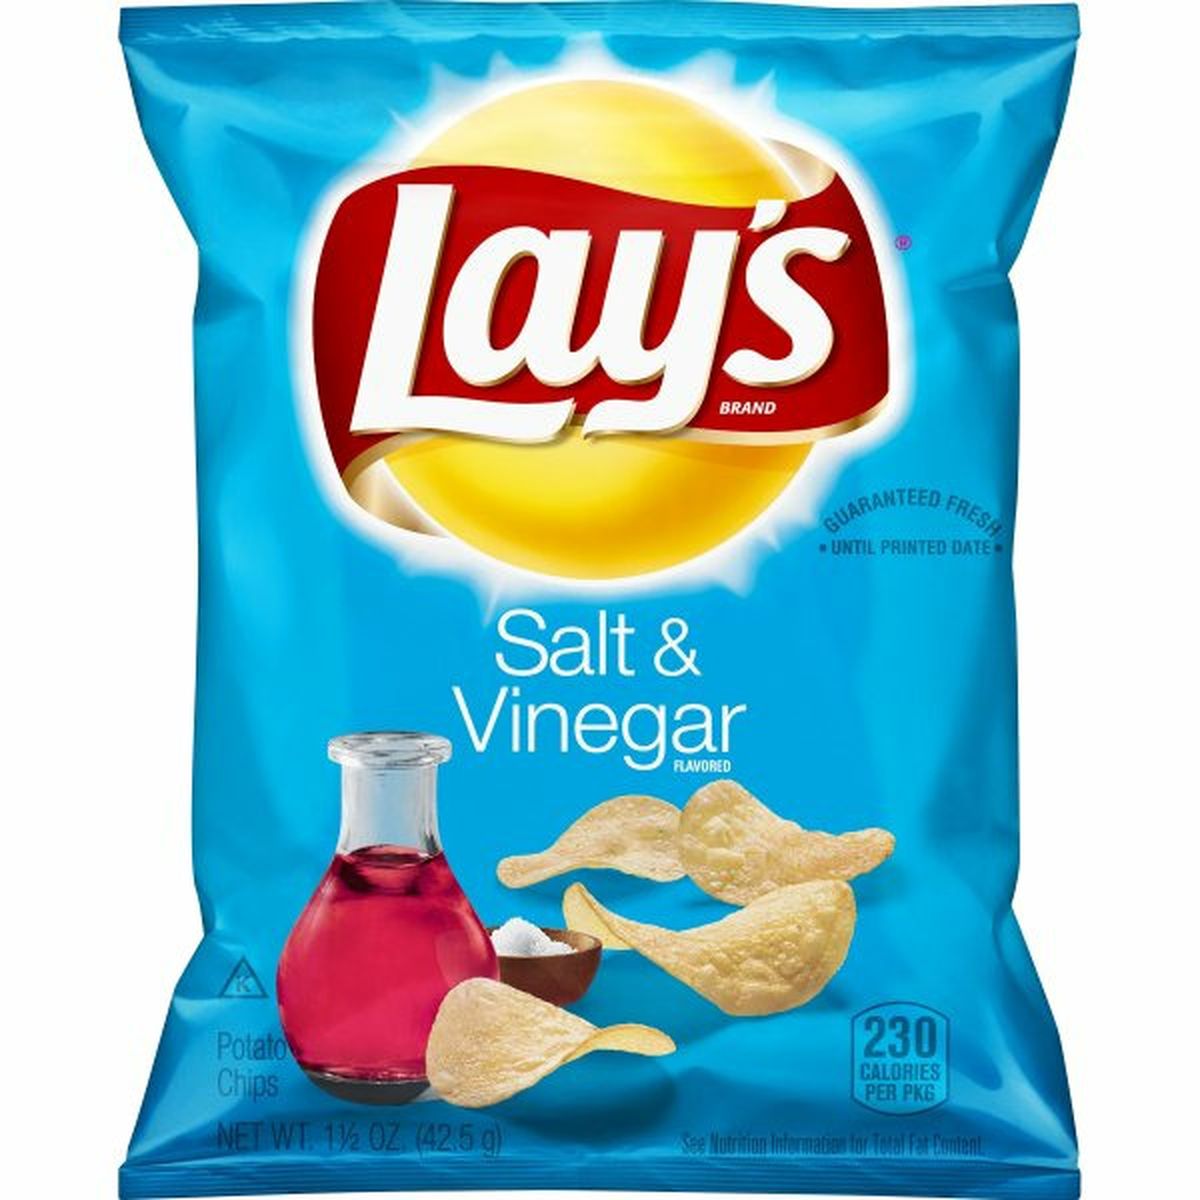 Calories in Lay's Potato Chips, Salt & Vinegar Flavored